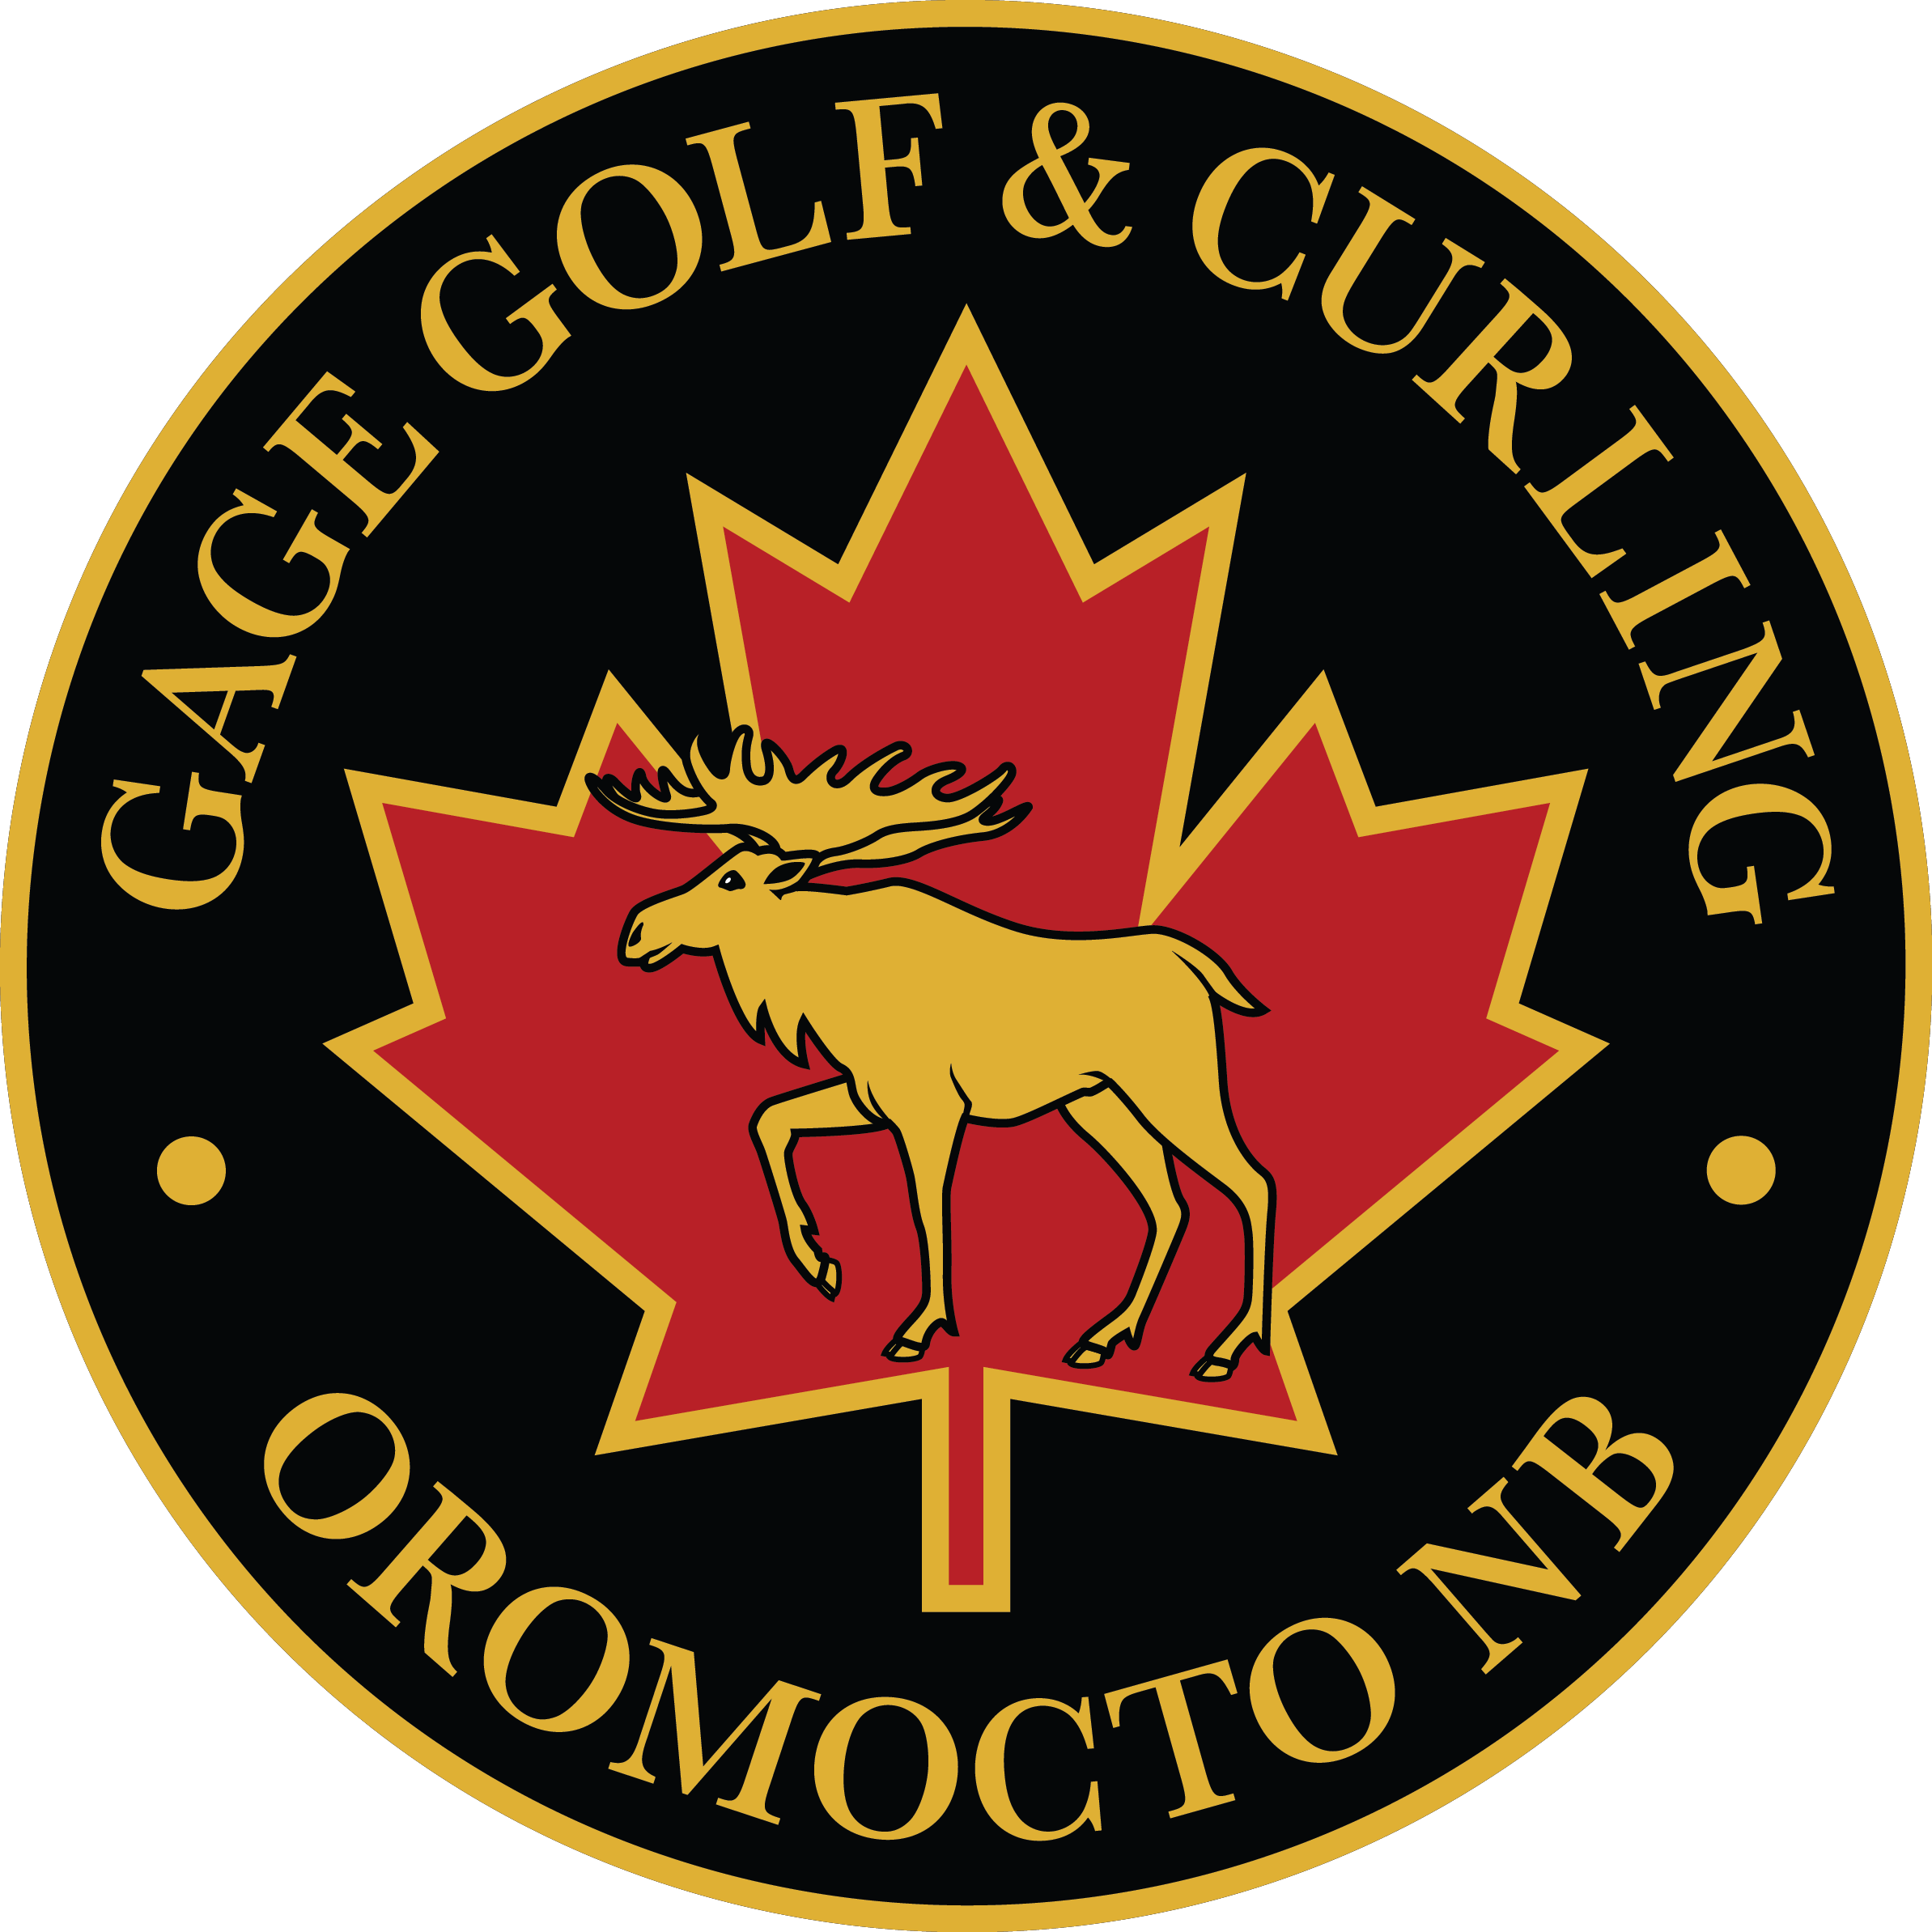 Gage Golf & Curling